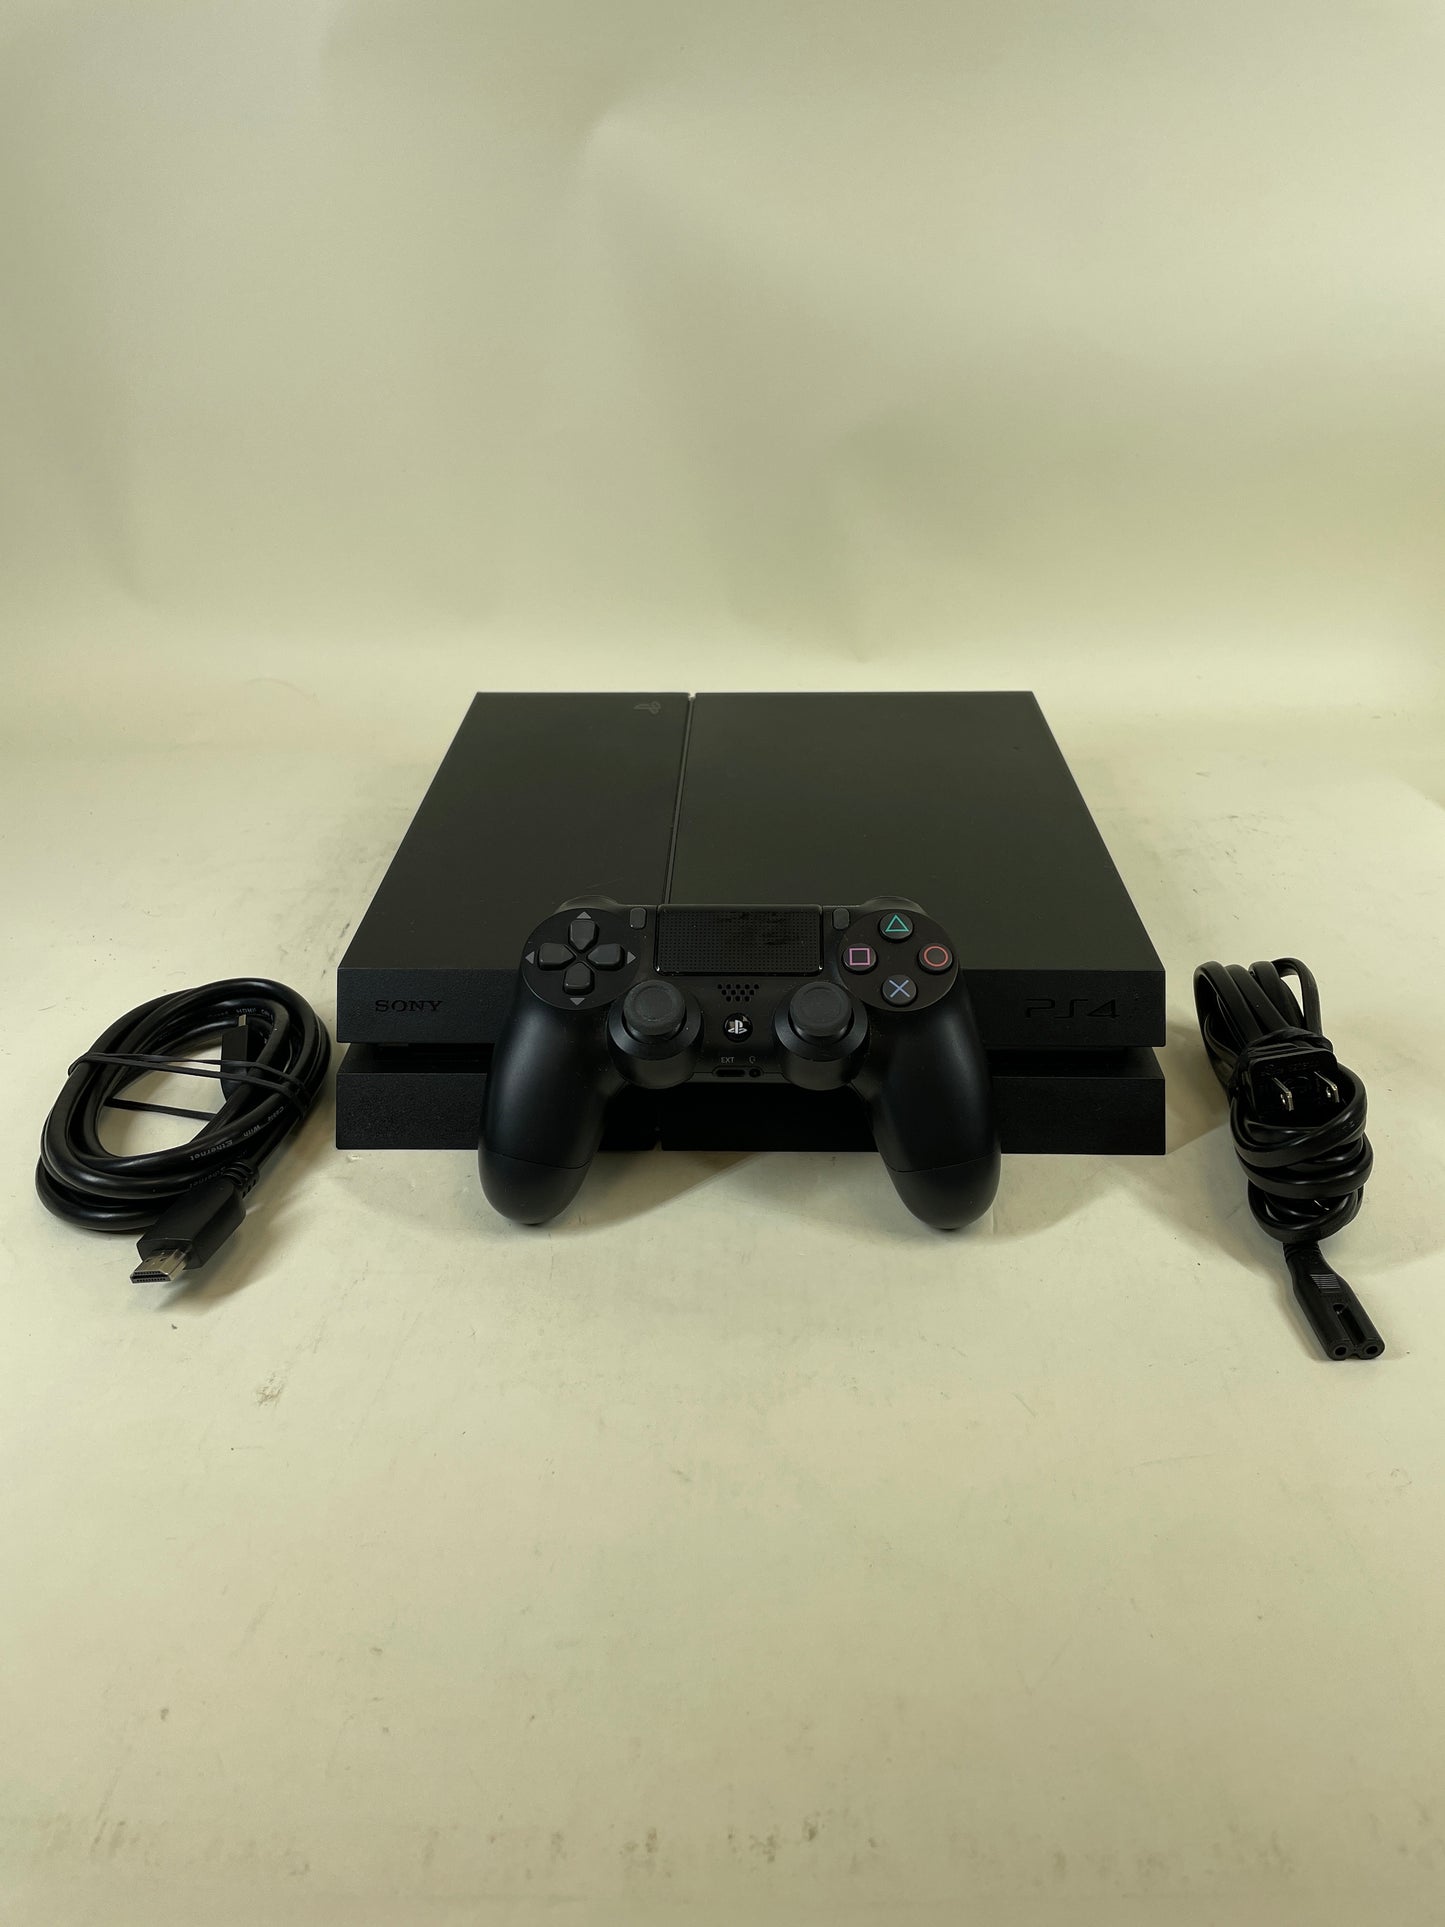 Sony PlayStation 4 Slim PS4 500GB Black Console Gaming System CUH-1215A